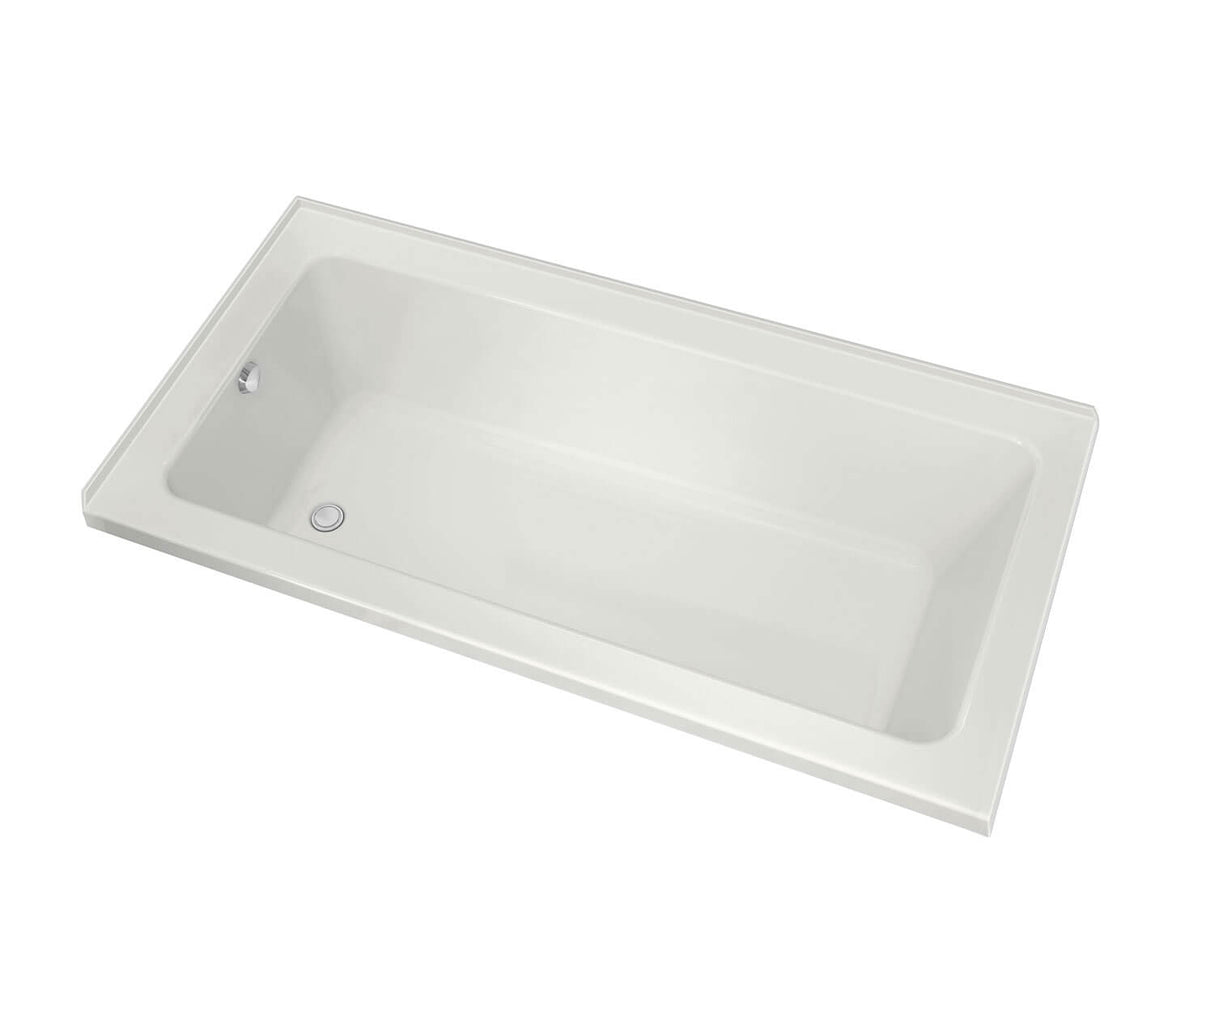 MAAX 106211-L-103-001 Pose 7236 IF Acrylic Corner Left Left-Hand Drain Aeroeffect Bathtub in White